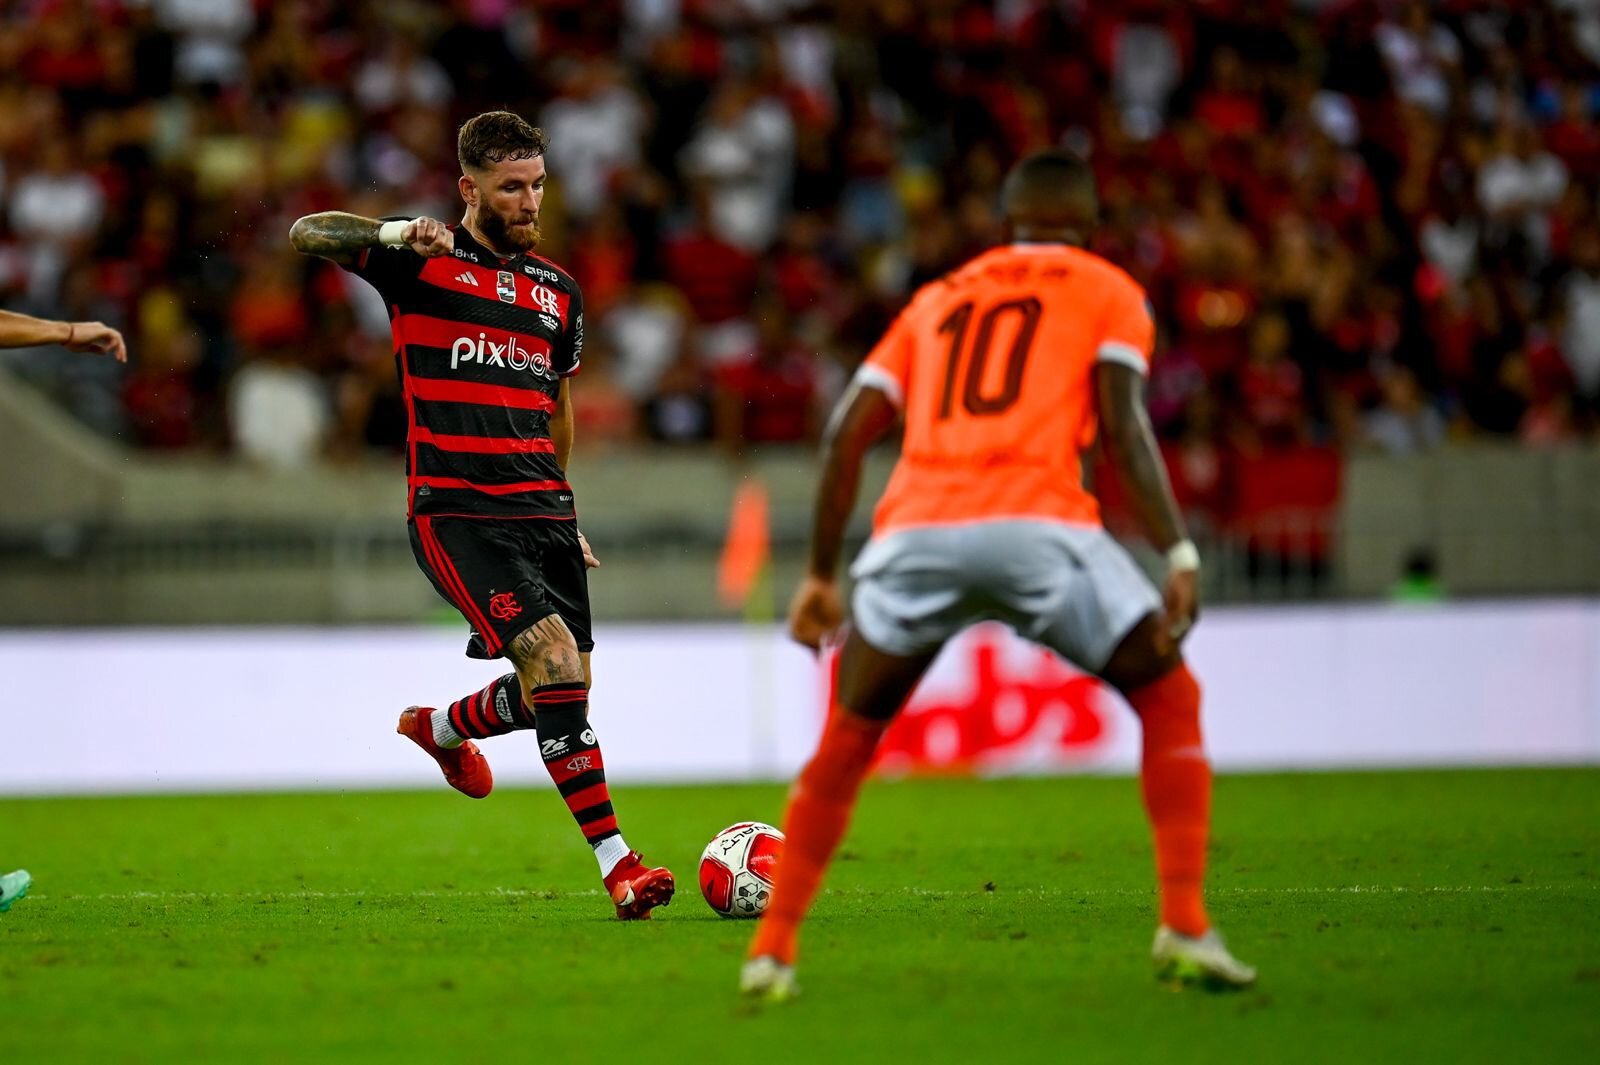 Rubro-Negro Carioca recebe o clube da Baixada Fluminense no Maracanã em busca do título estadual, após vencer a primeira partida por 3 a 0